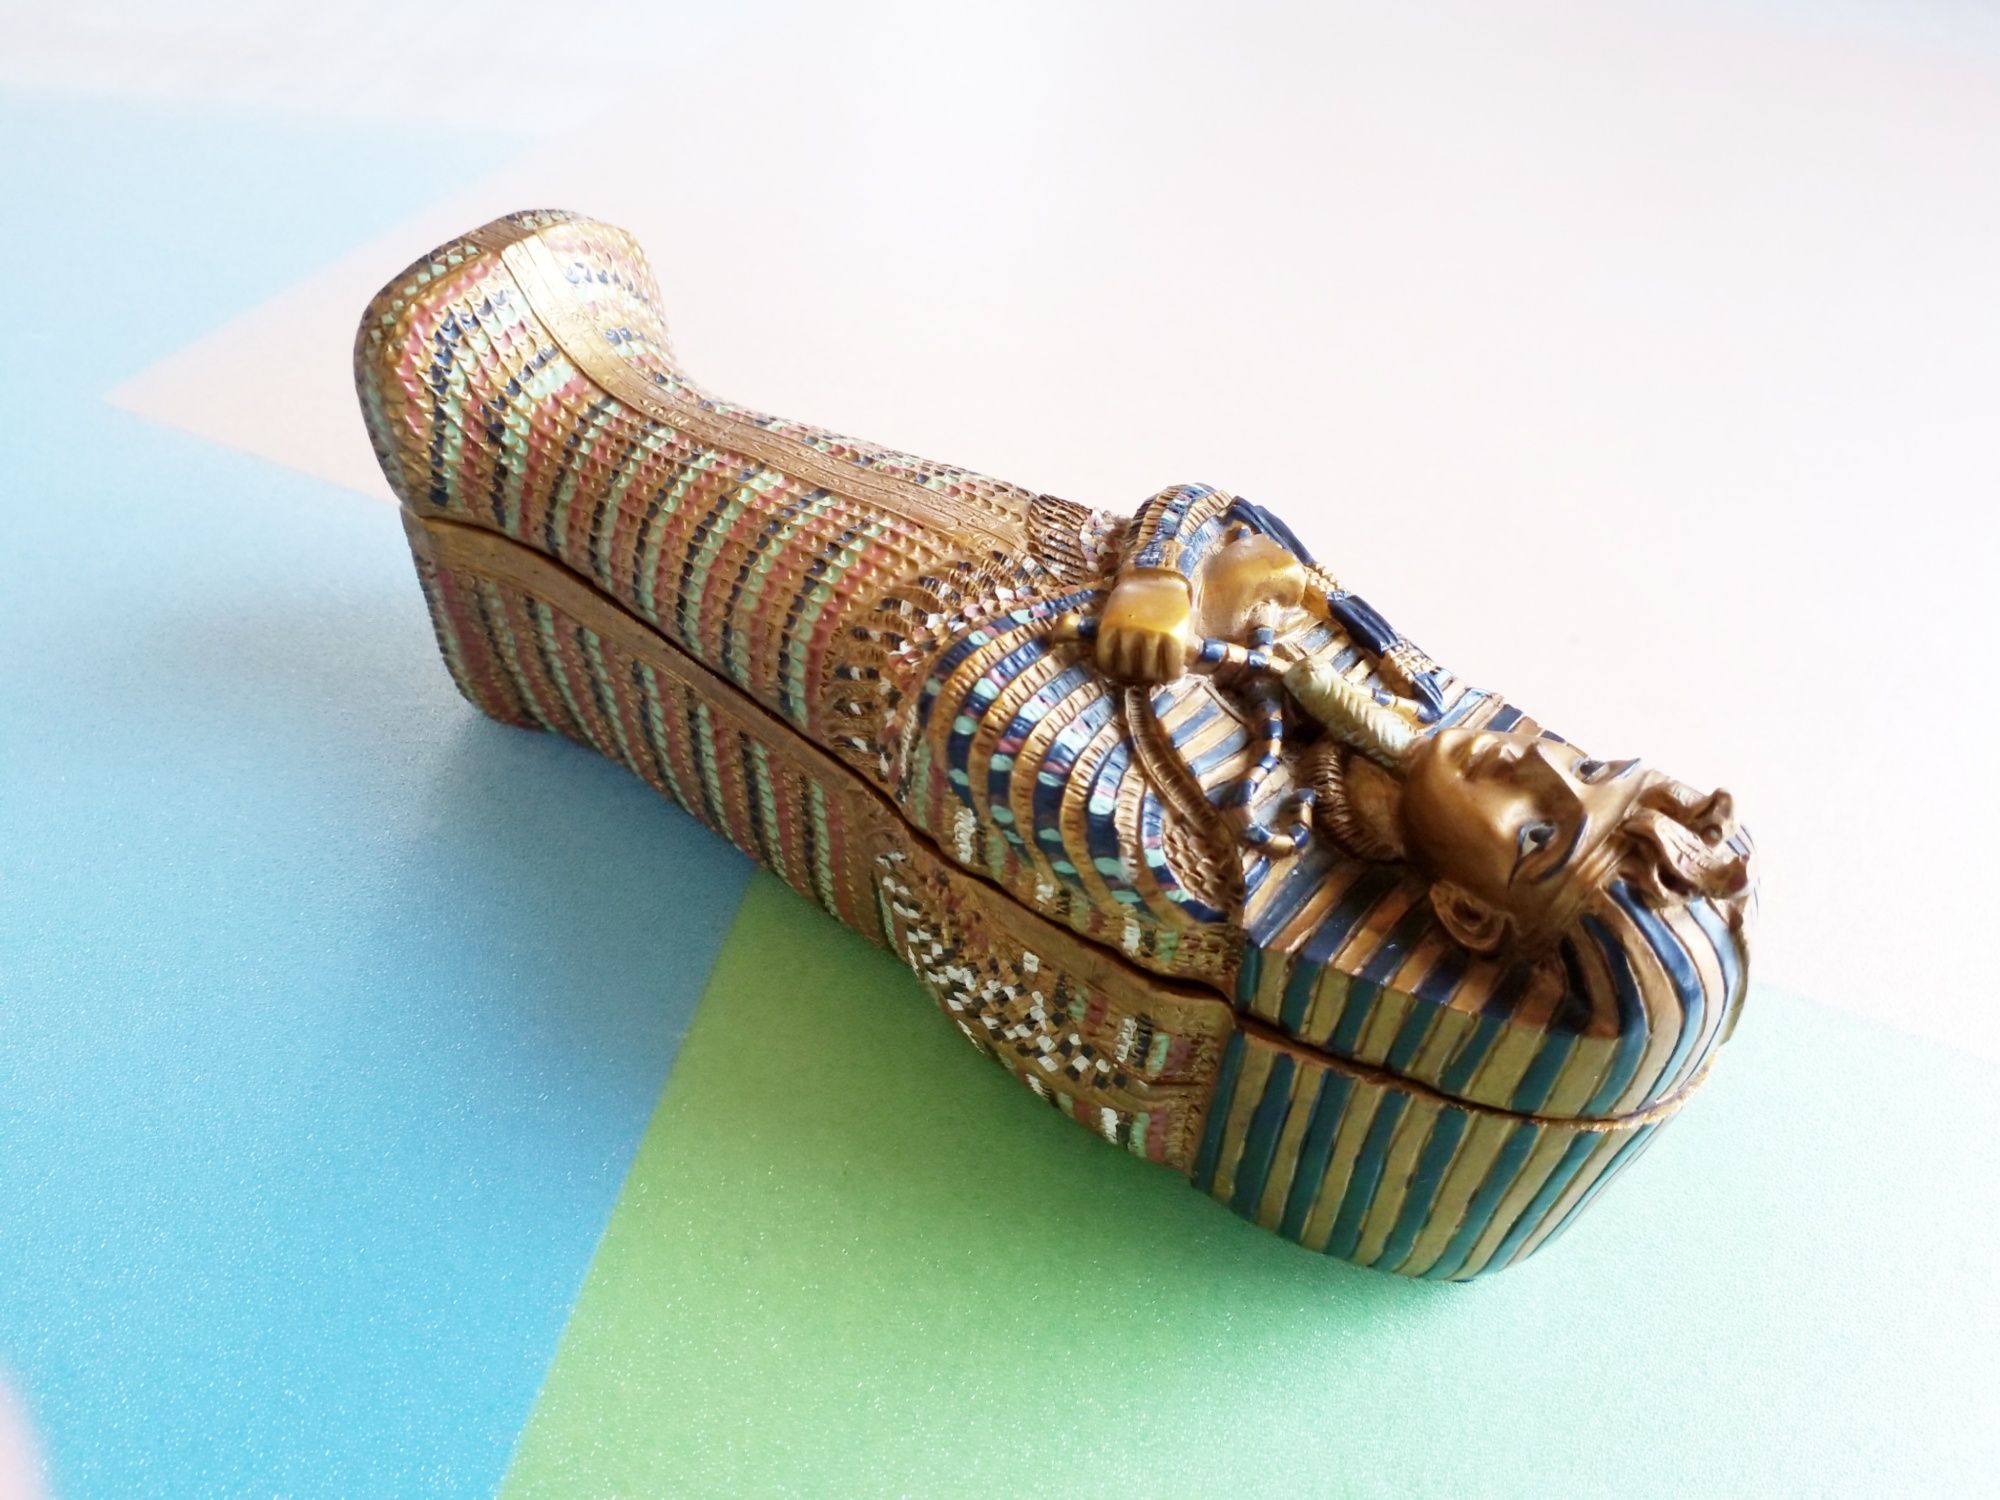 UNICAT - Ornament egiptean original Egipt, sarcofag Tutankhamon